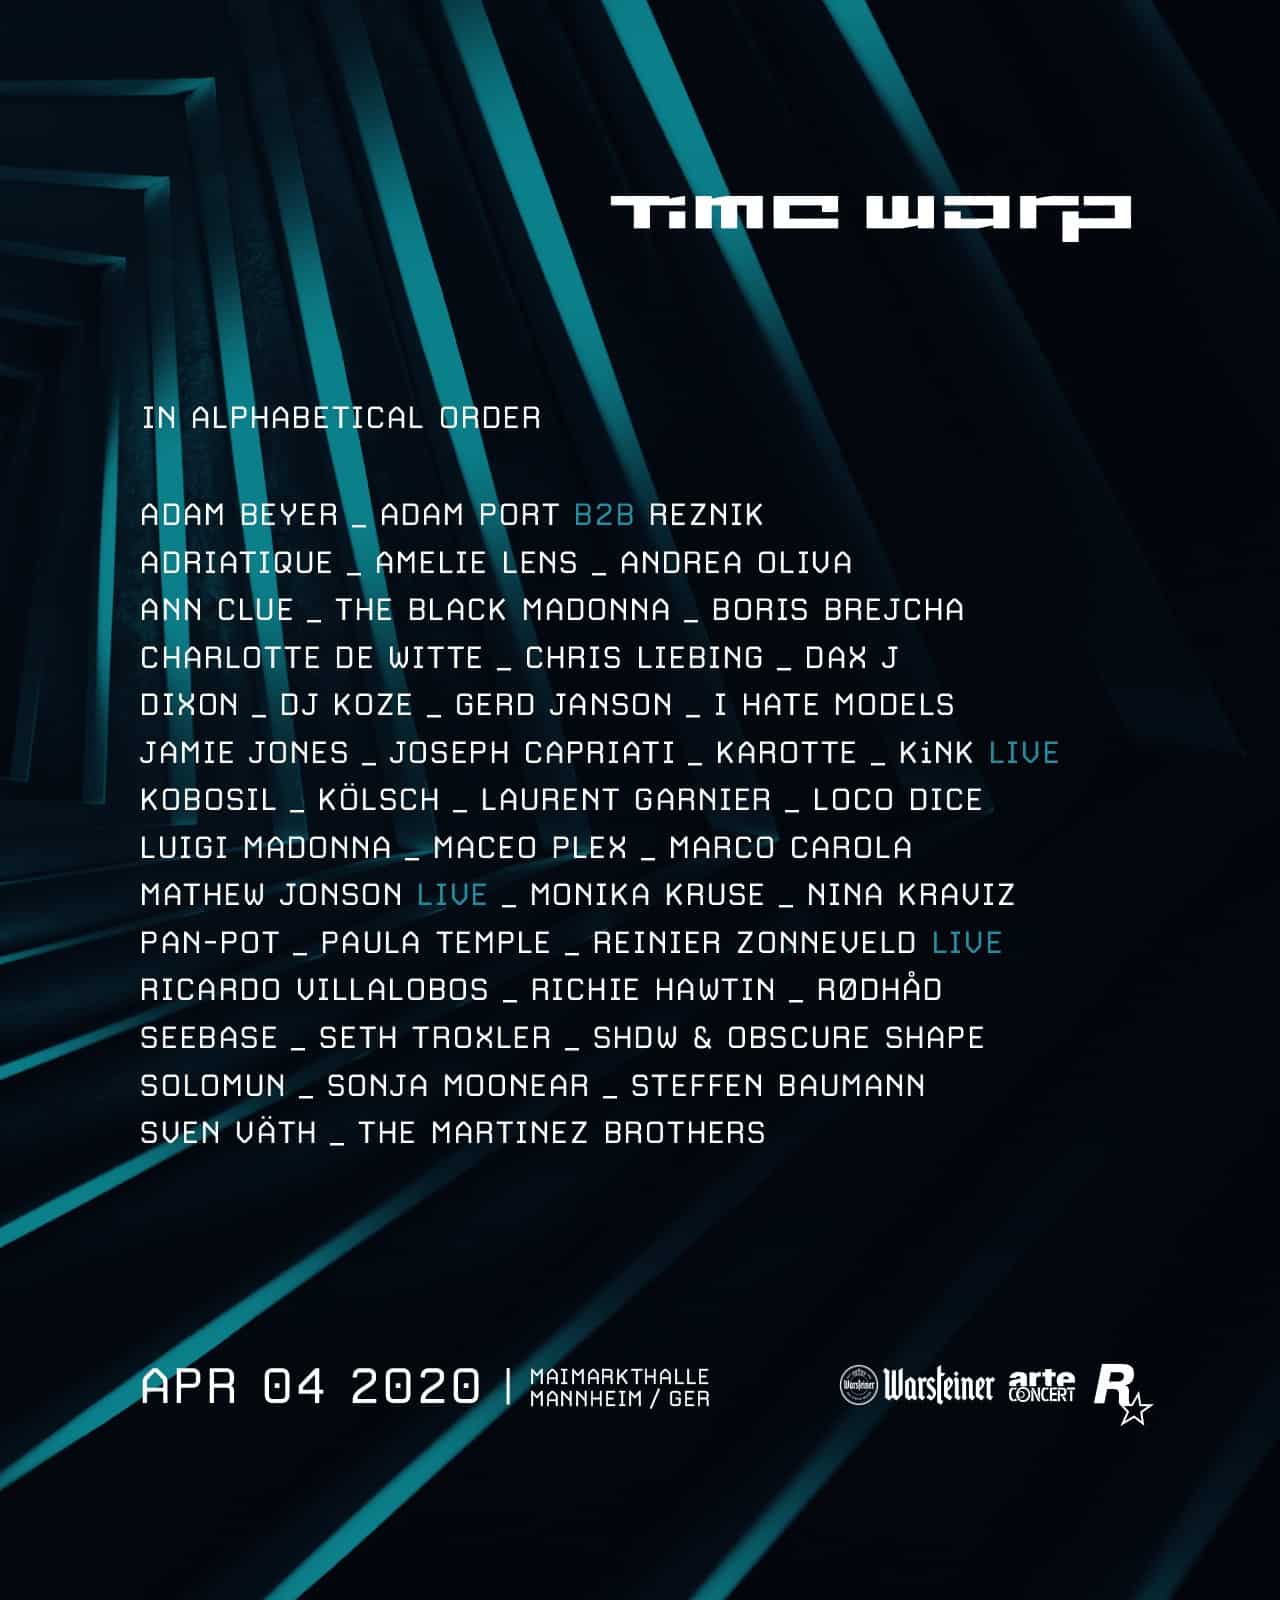 Time Warp 2020 - Lineup